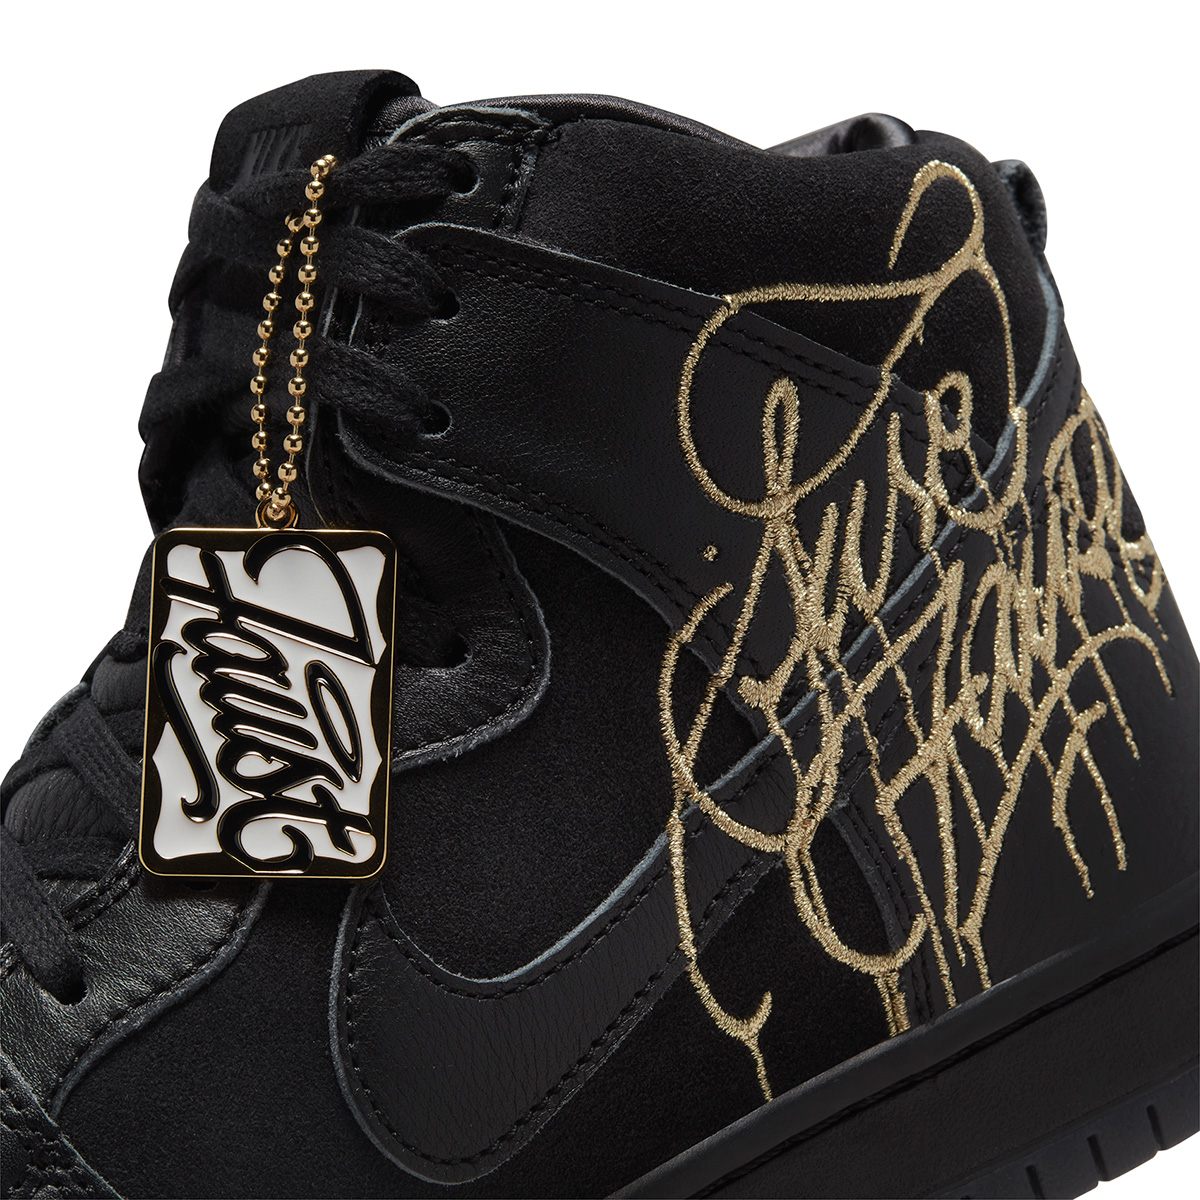 FAUST Nike SB Dunk High Black Metallic Gold DH7755-001 Release Date